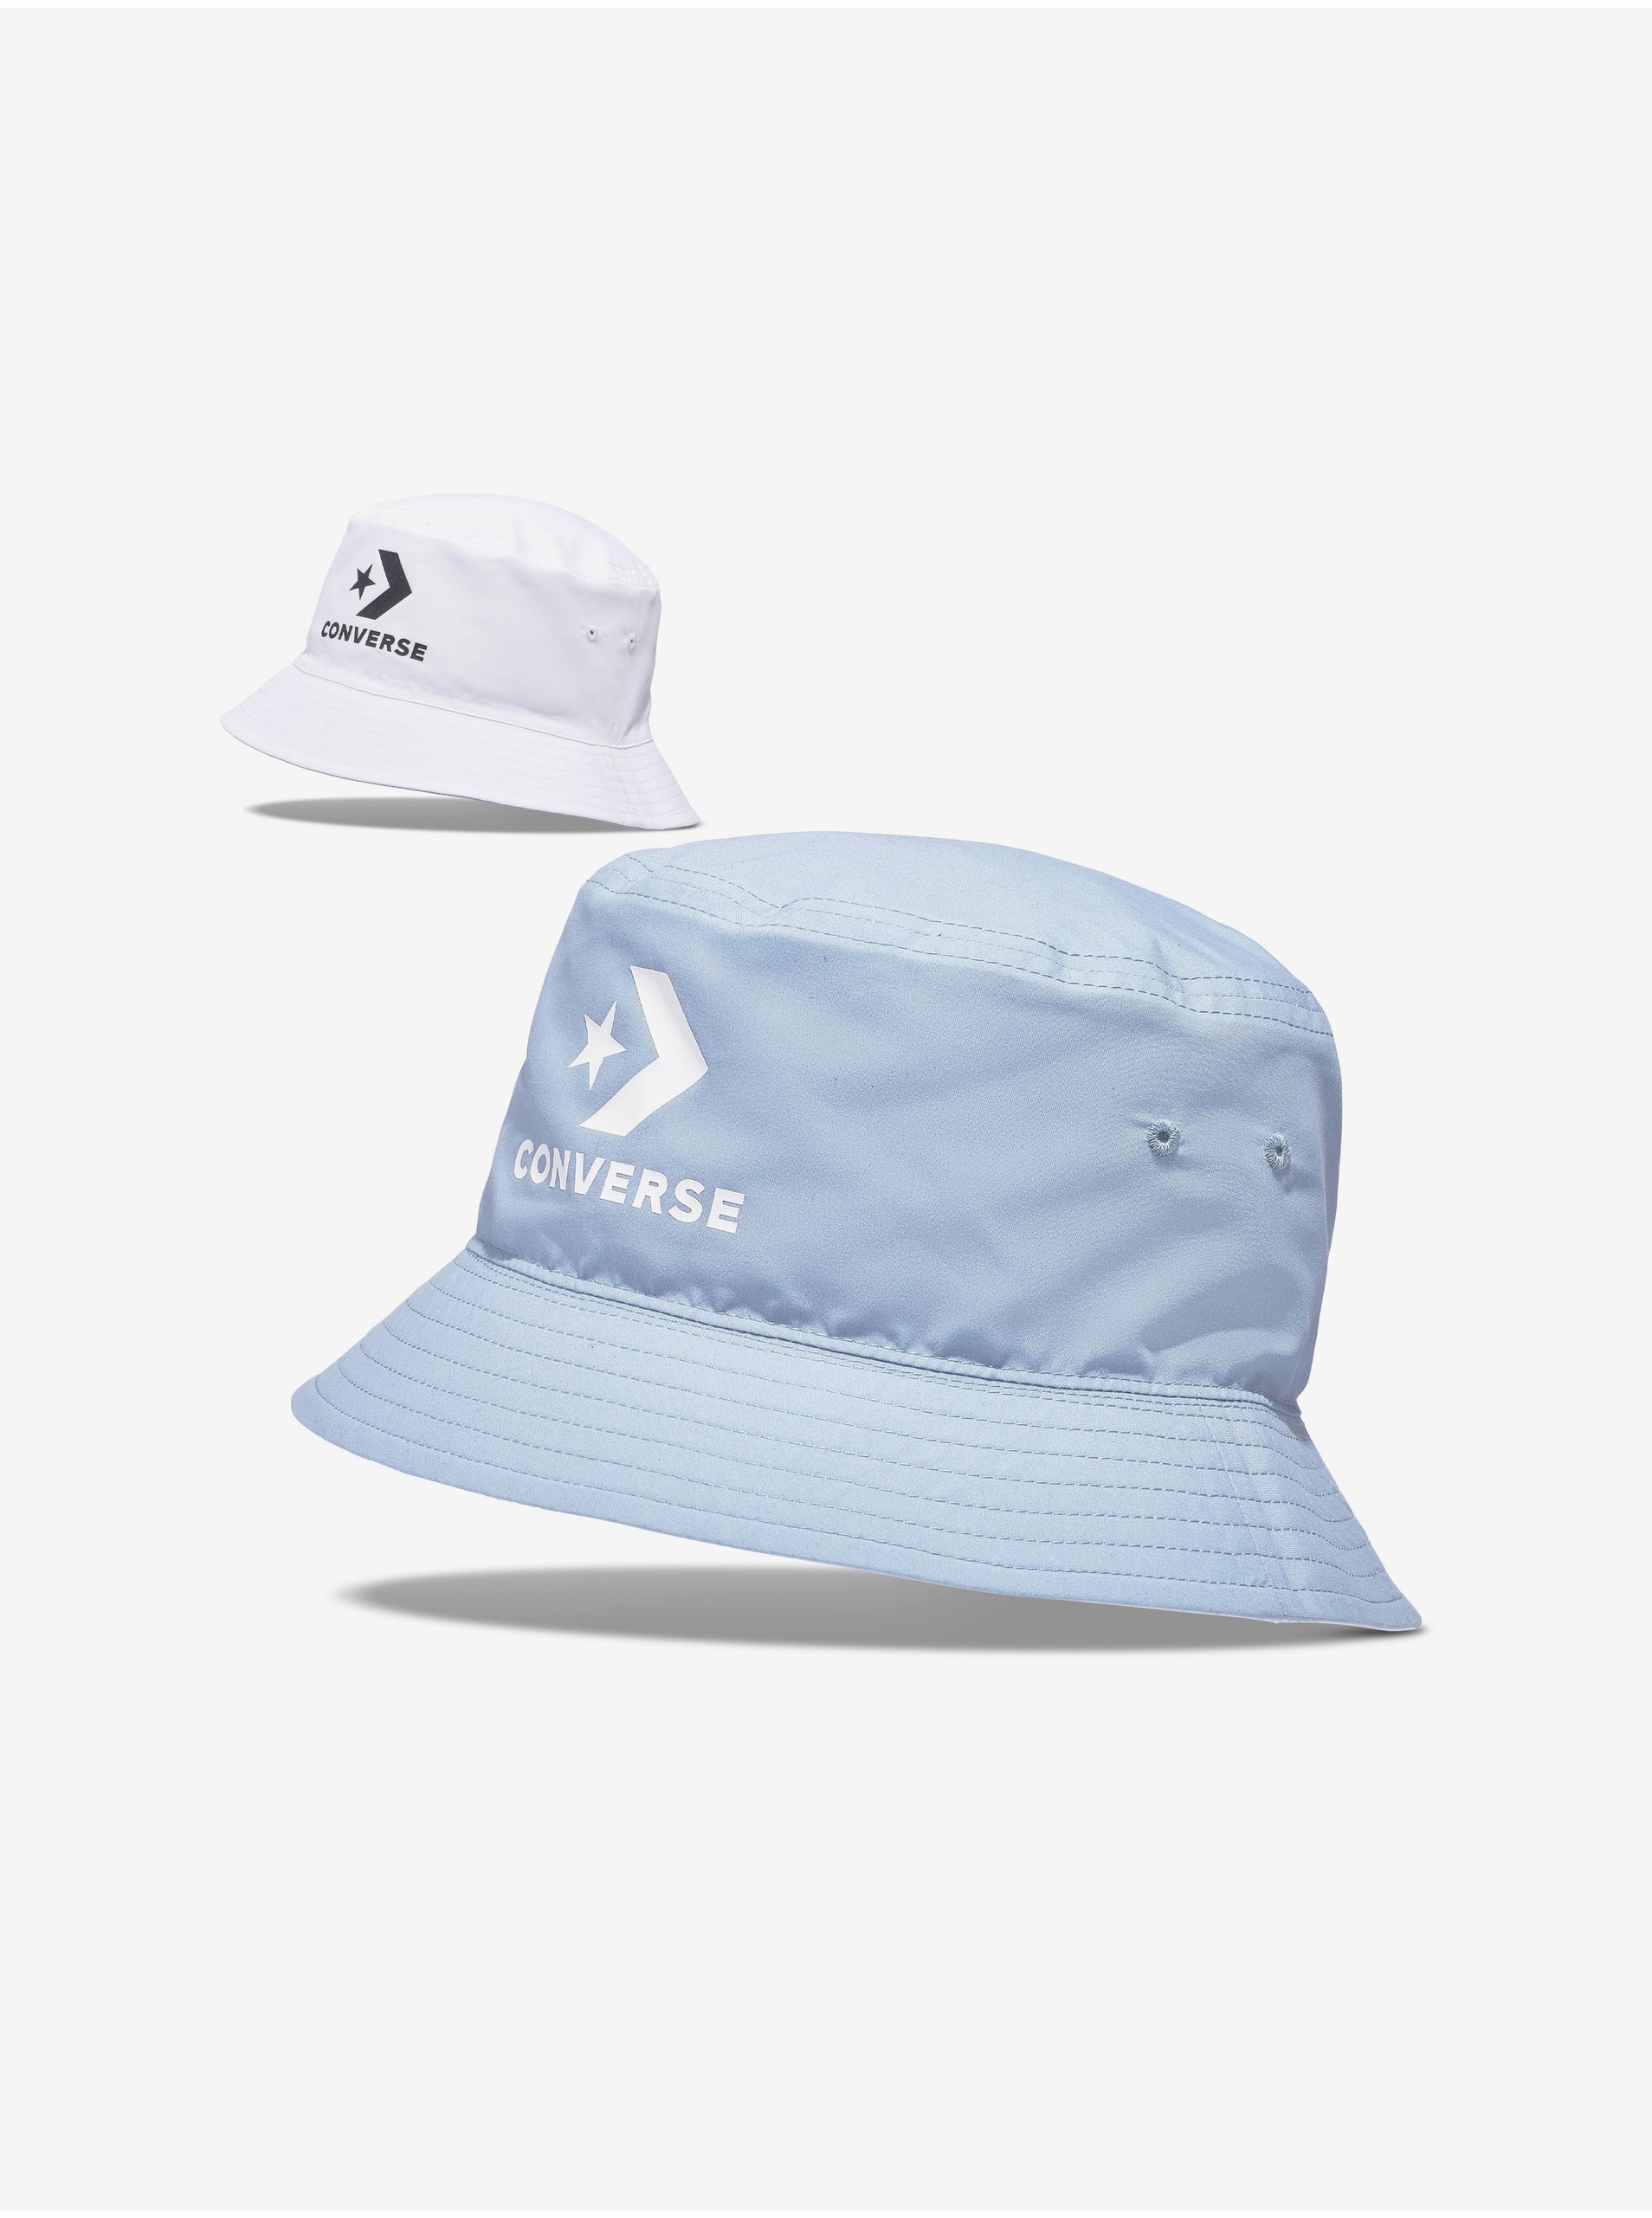 E-shop Modro-bílý oboustranný klobouk Converse